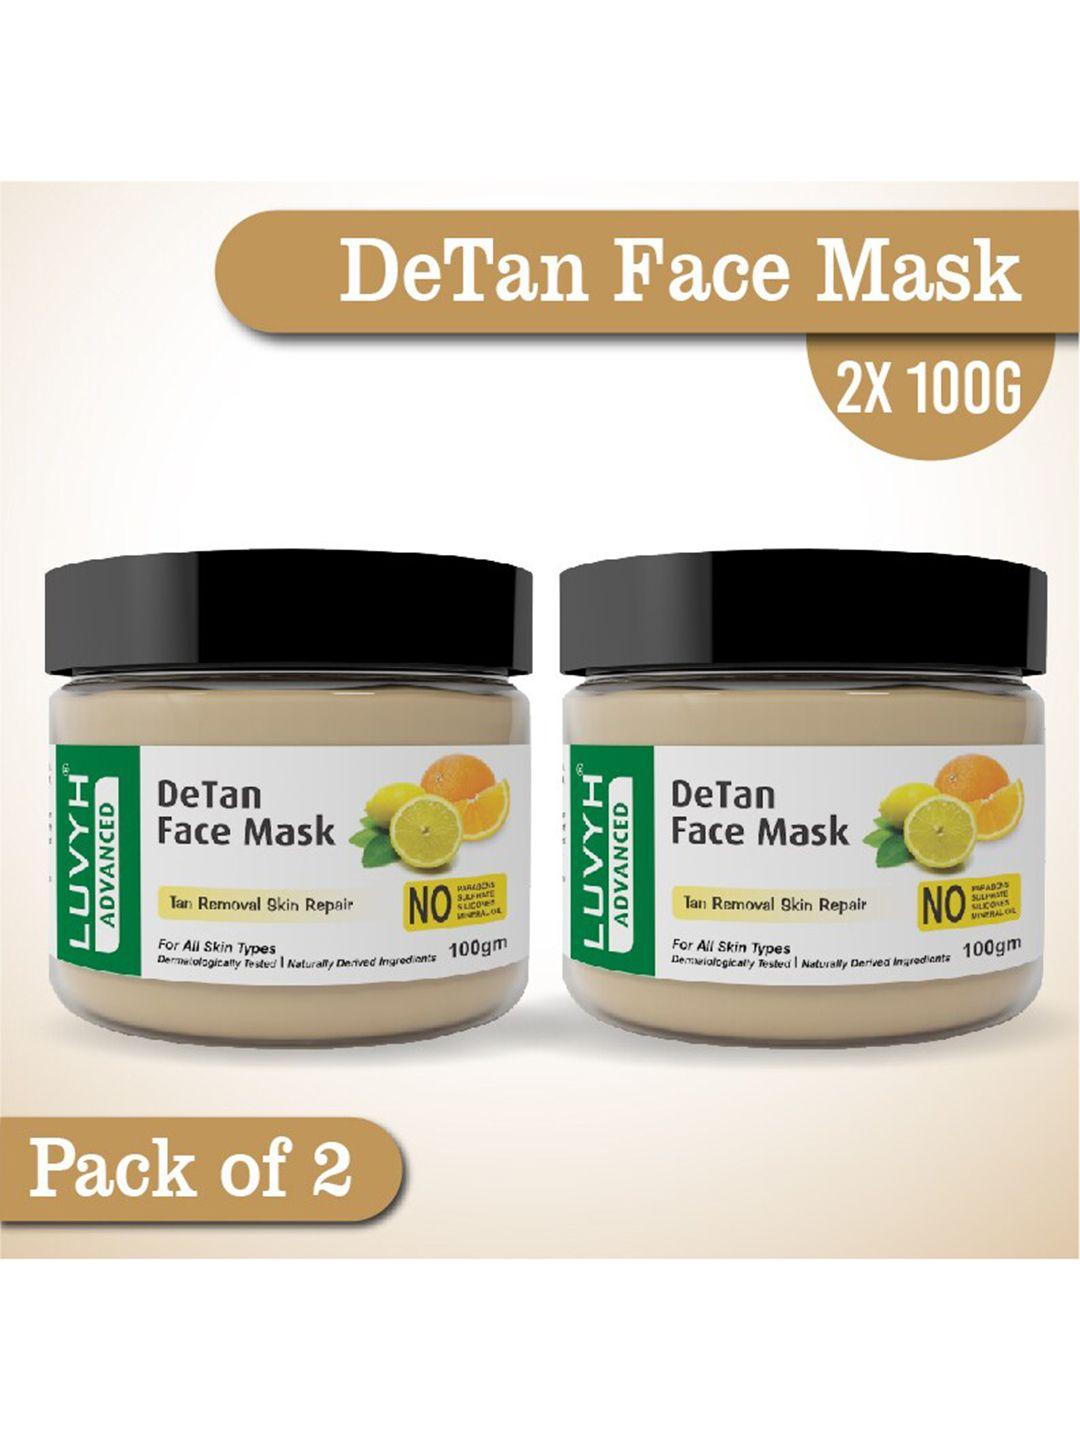 luvyh set of 2 detan face mask- 200g